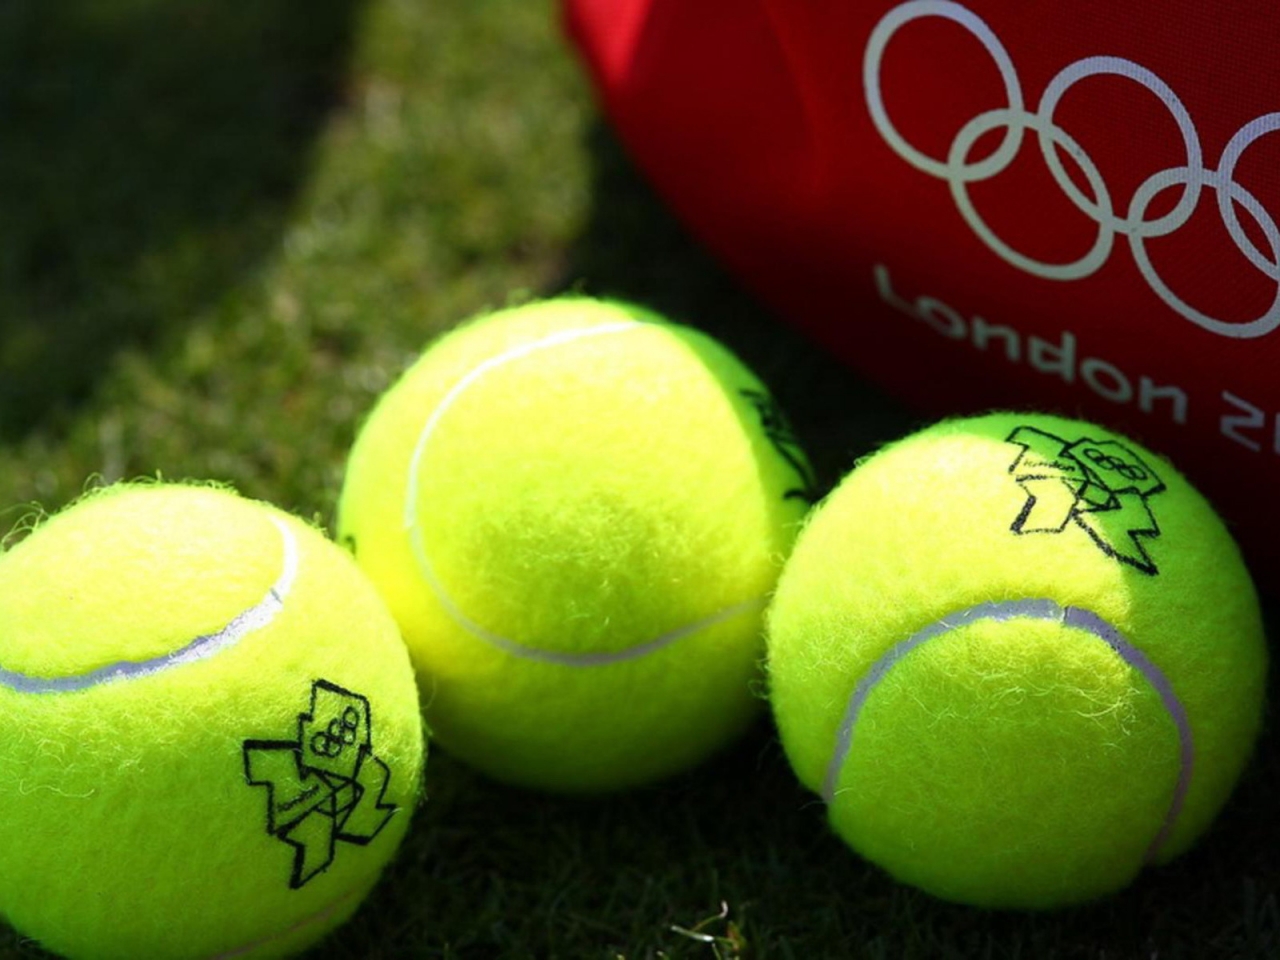 London 2012 Olympics Tennis Balls for 1280 x 960 resolution